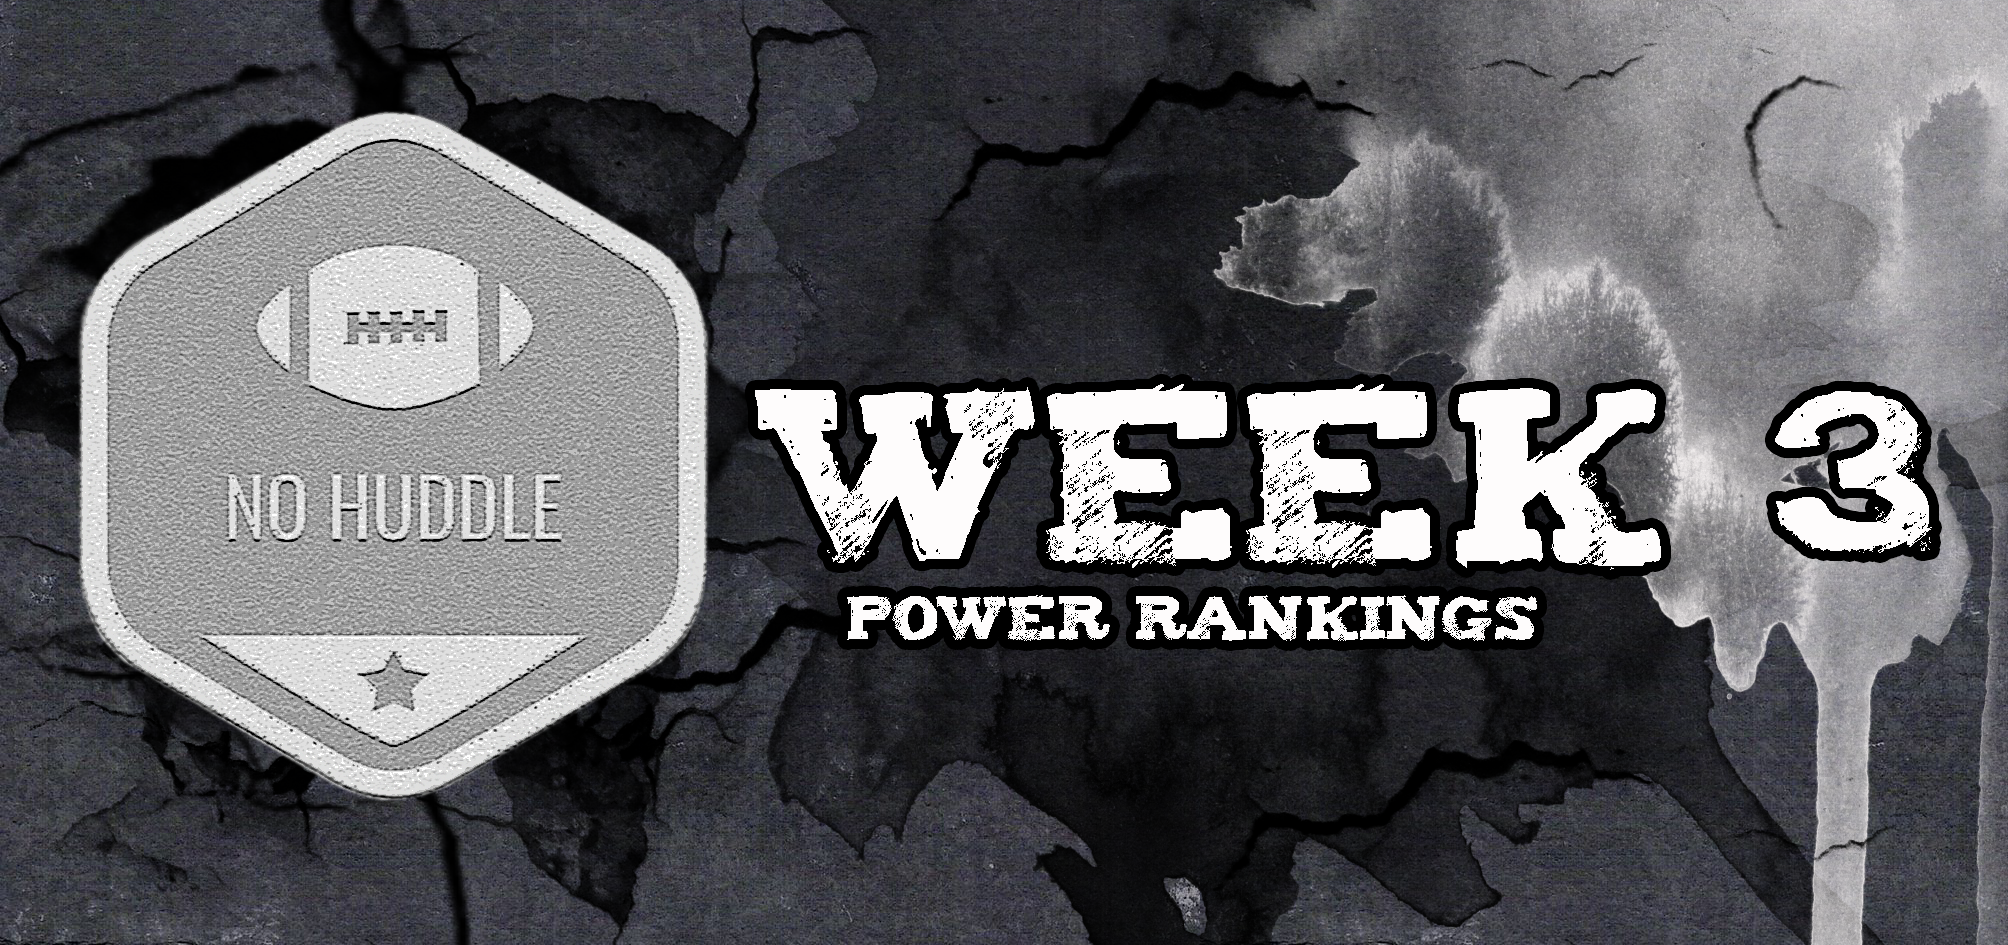 Power Rankings: Semana 3